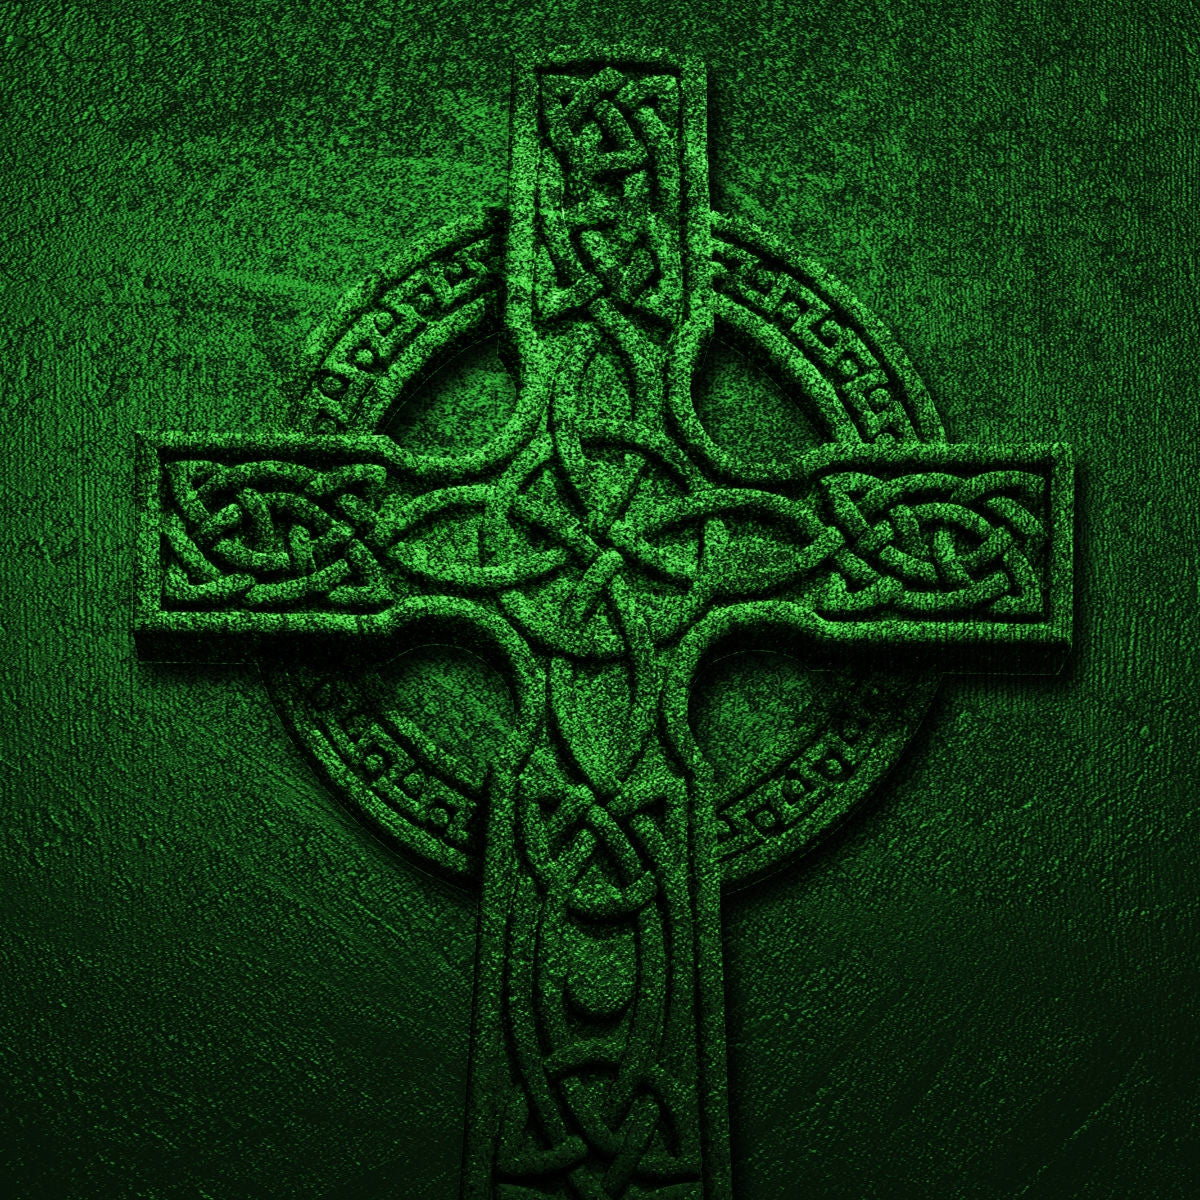 the celtic cross